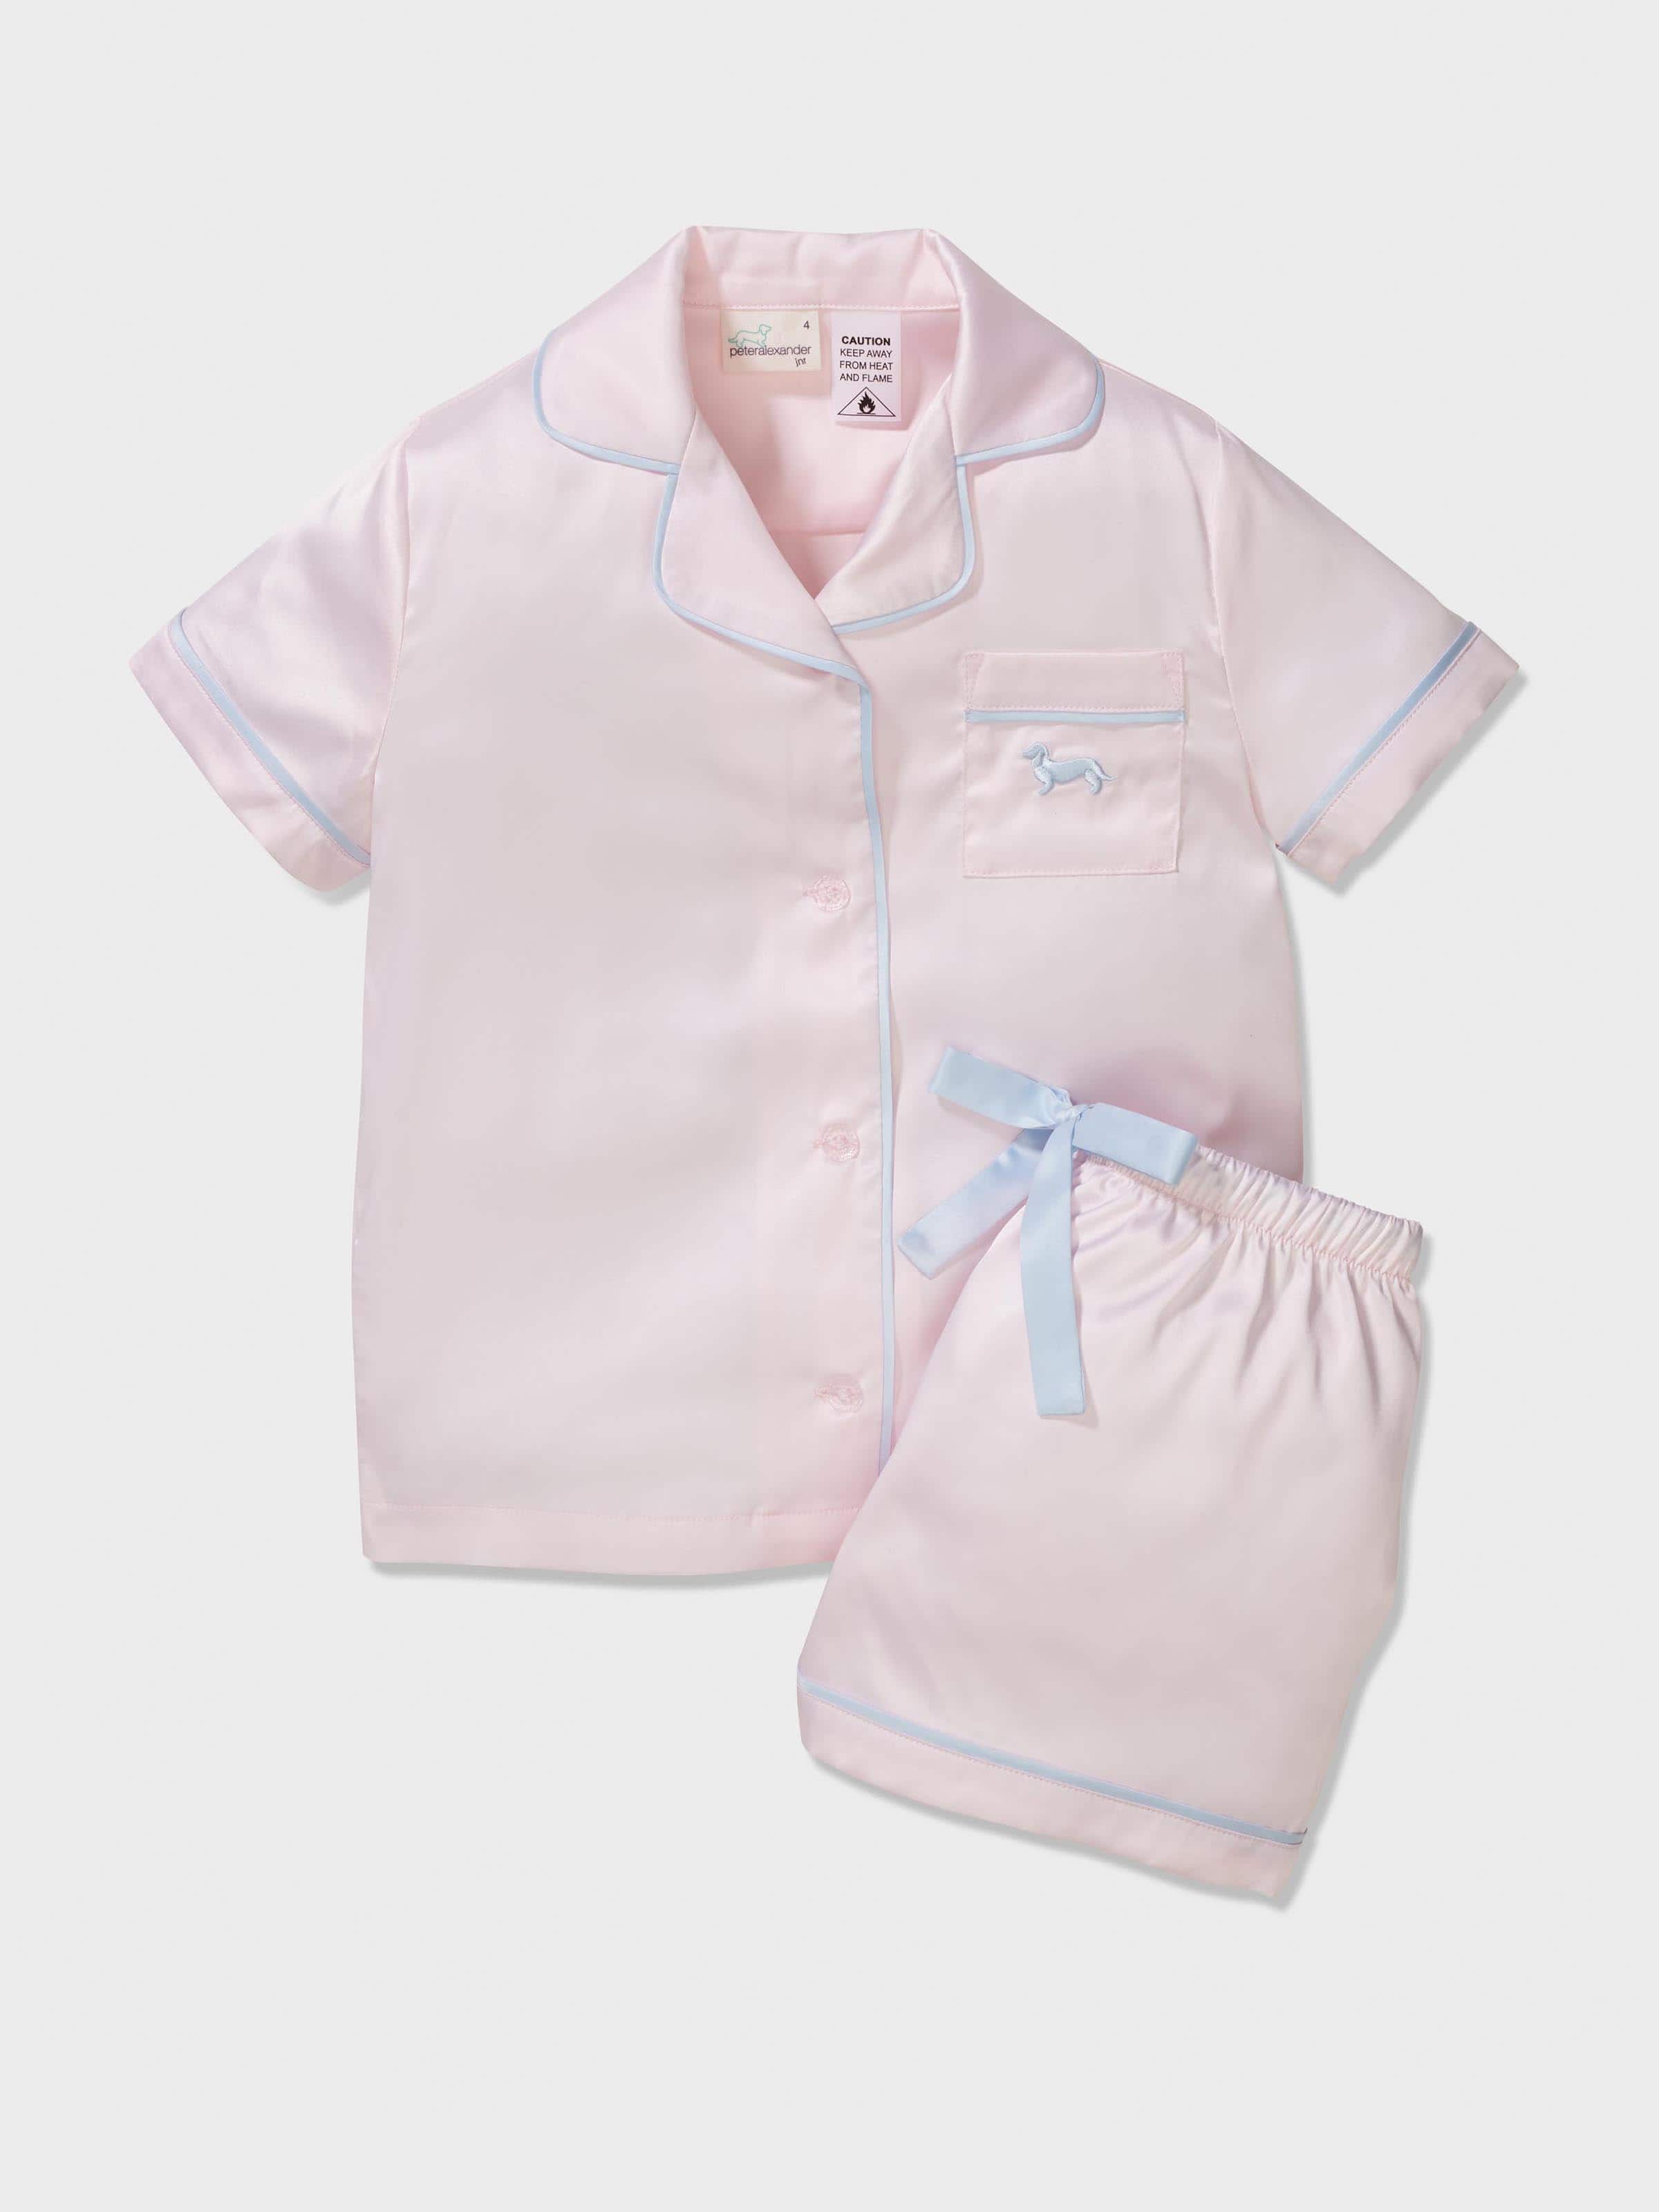 Boys Girls Short Silk Pajamas Set,Classic Satin Pajamas for Toddler,Kids 2  Piece Button-Down Short Sleeve Sleepwear 12-24M Pink